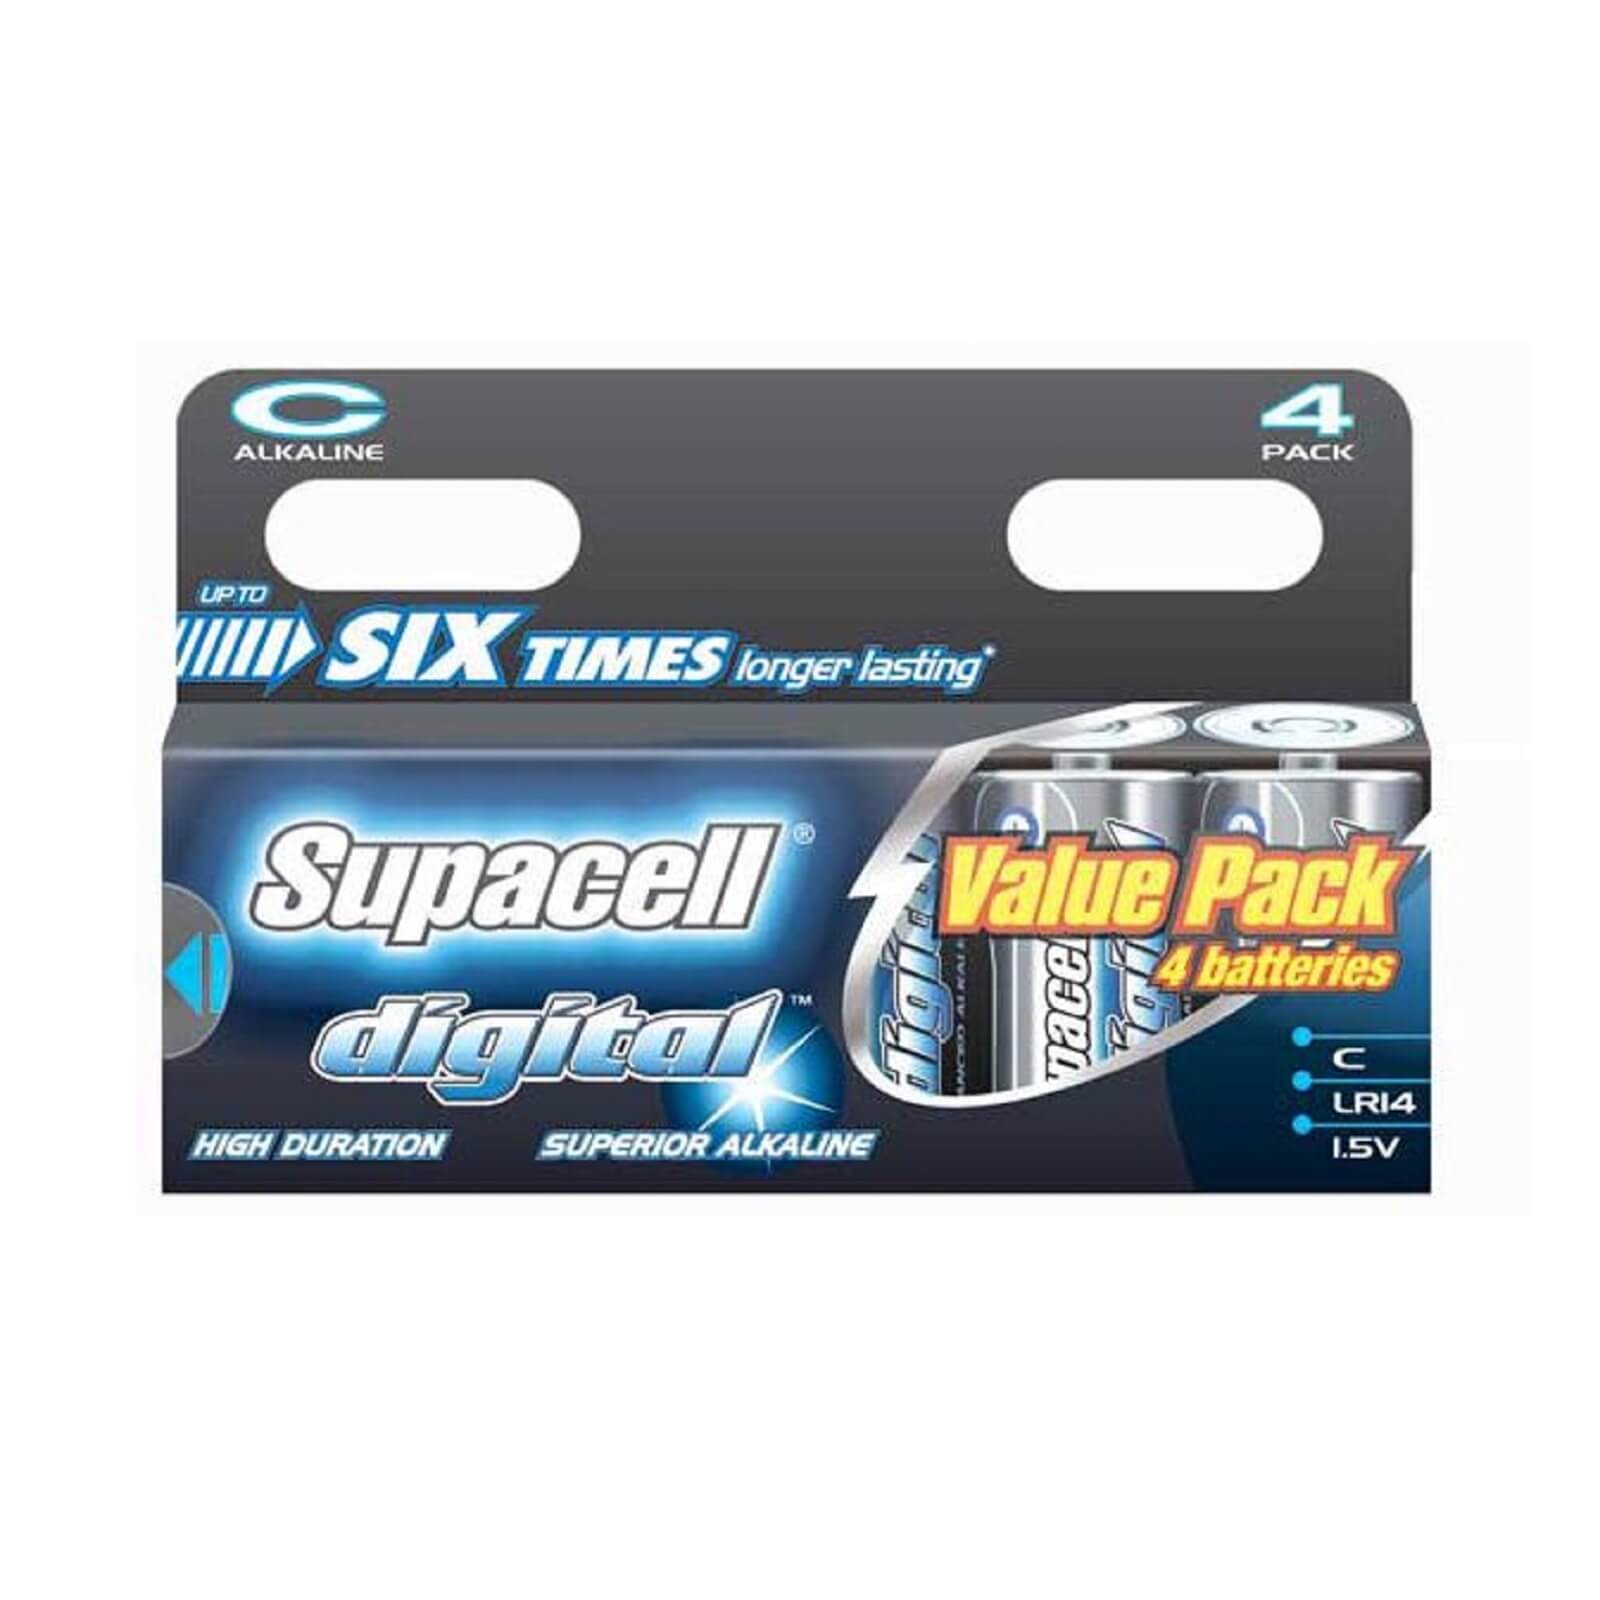 Supacell Digital C Batteries - 4 Pack